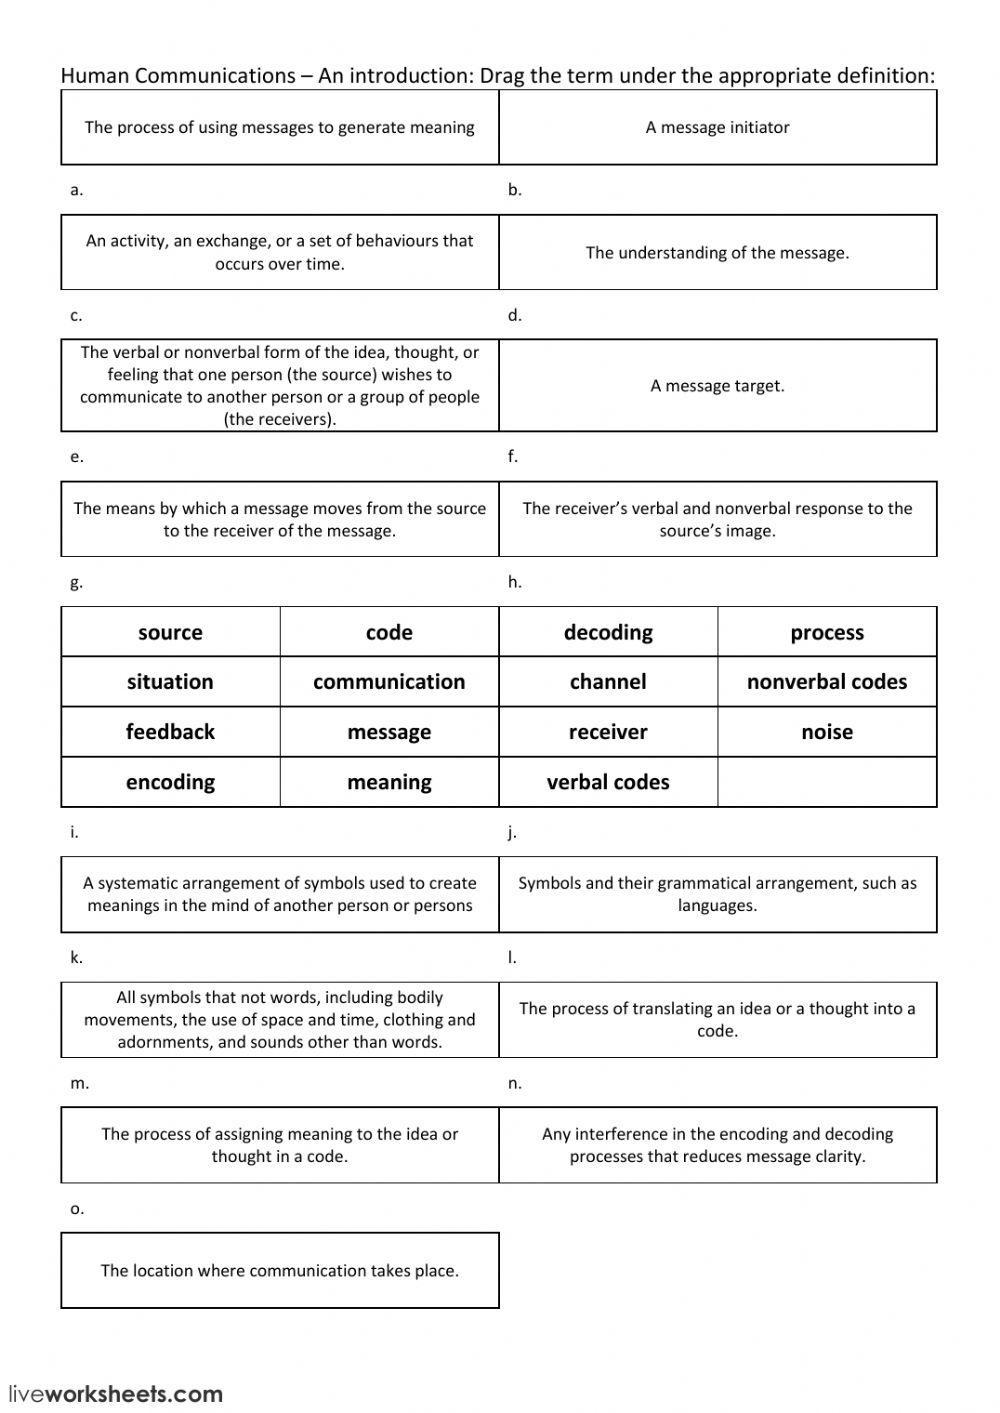 Intro to Human Communications - Vocabulary